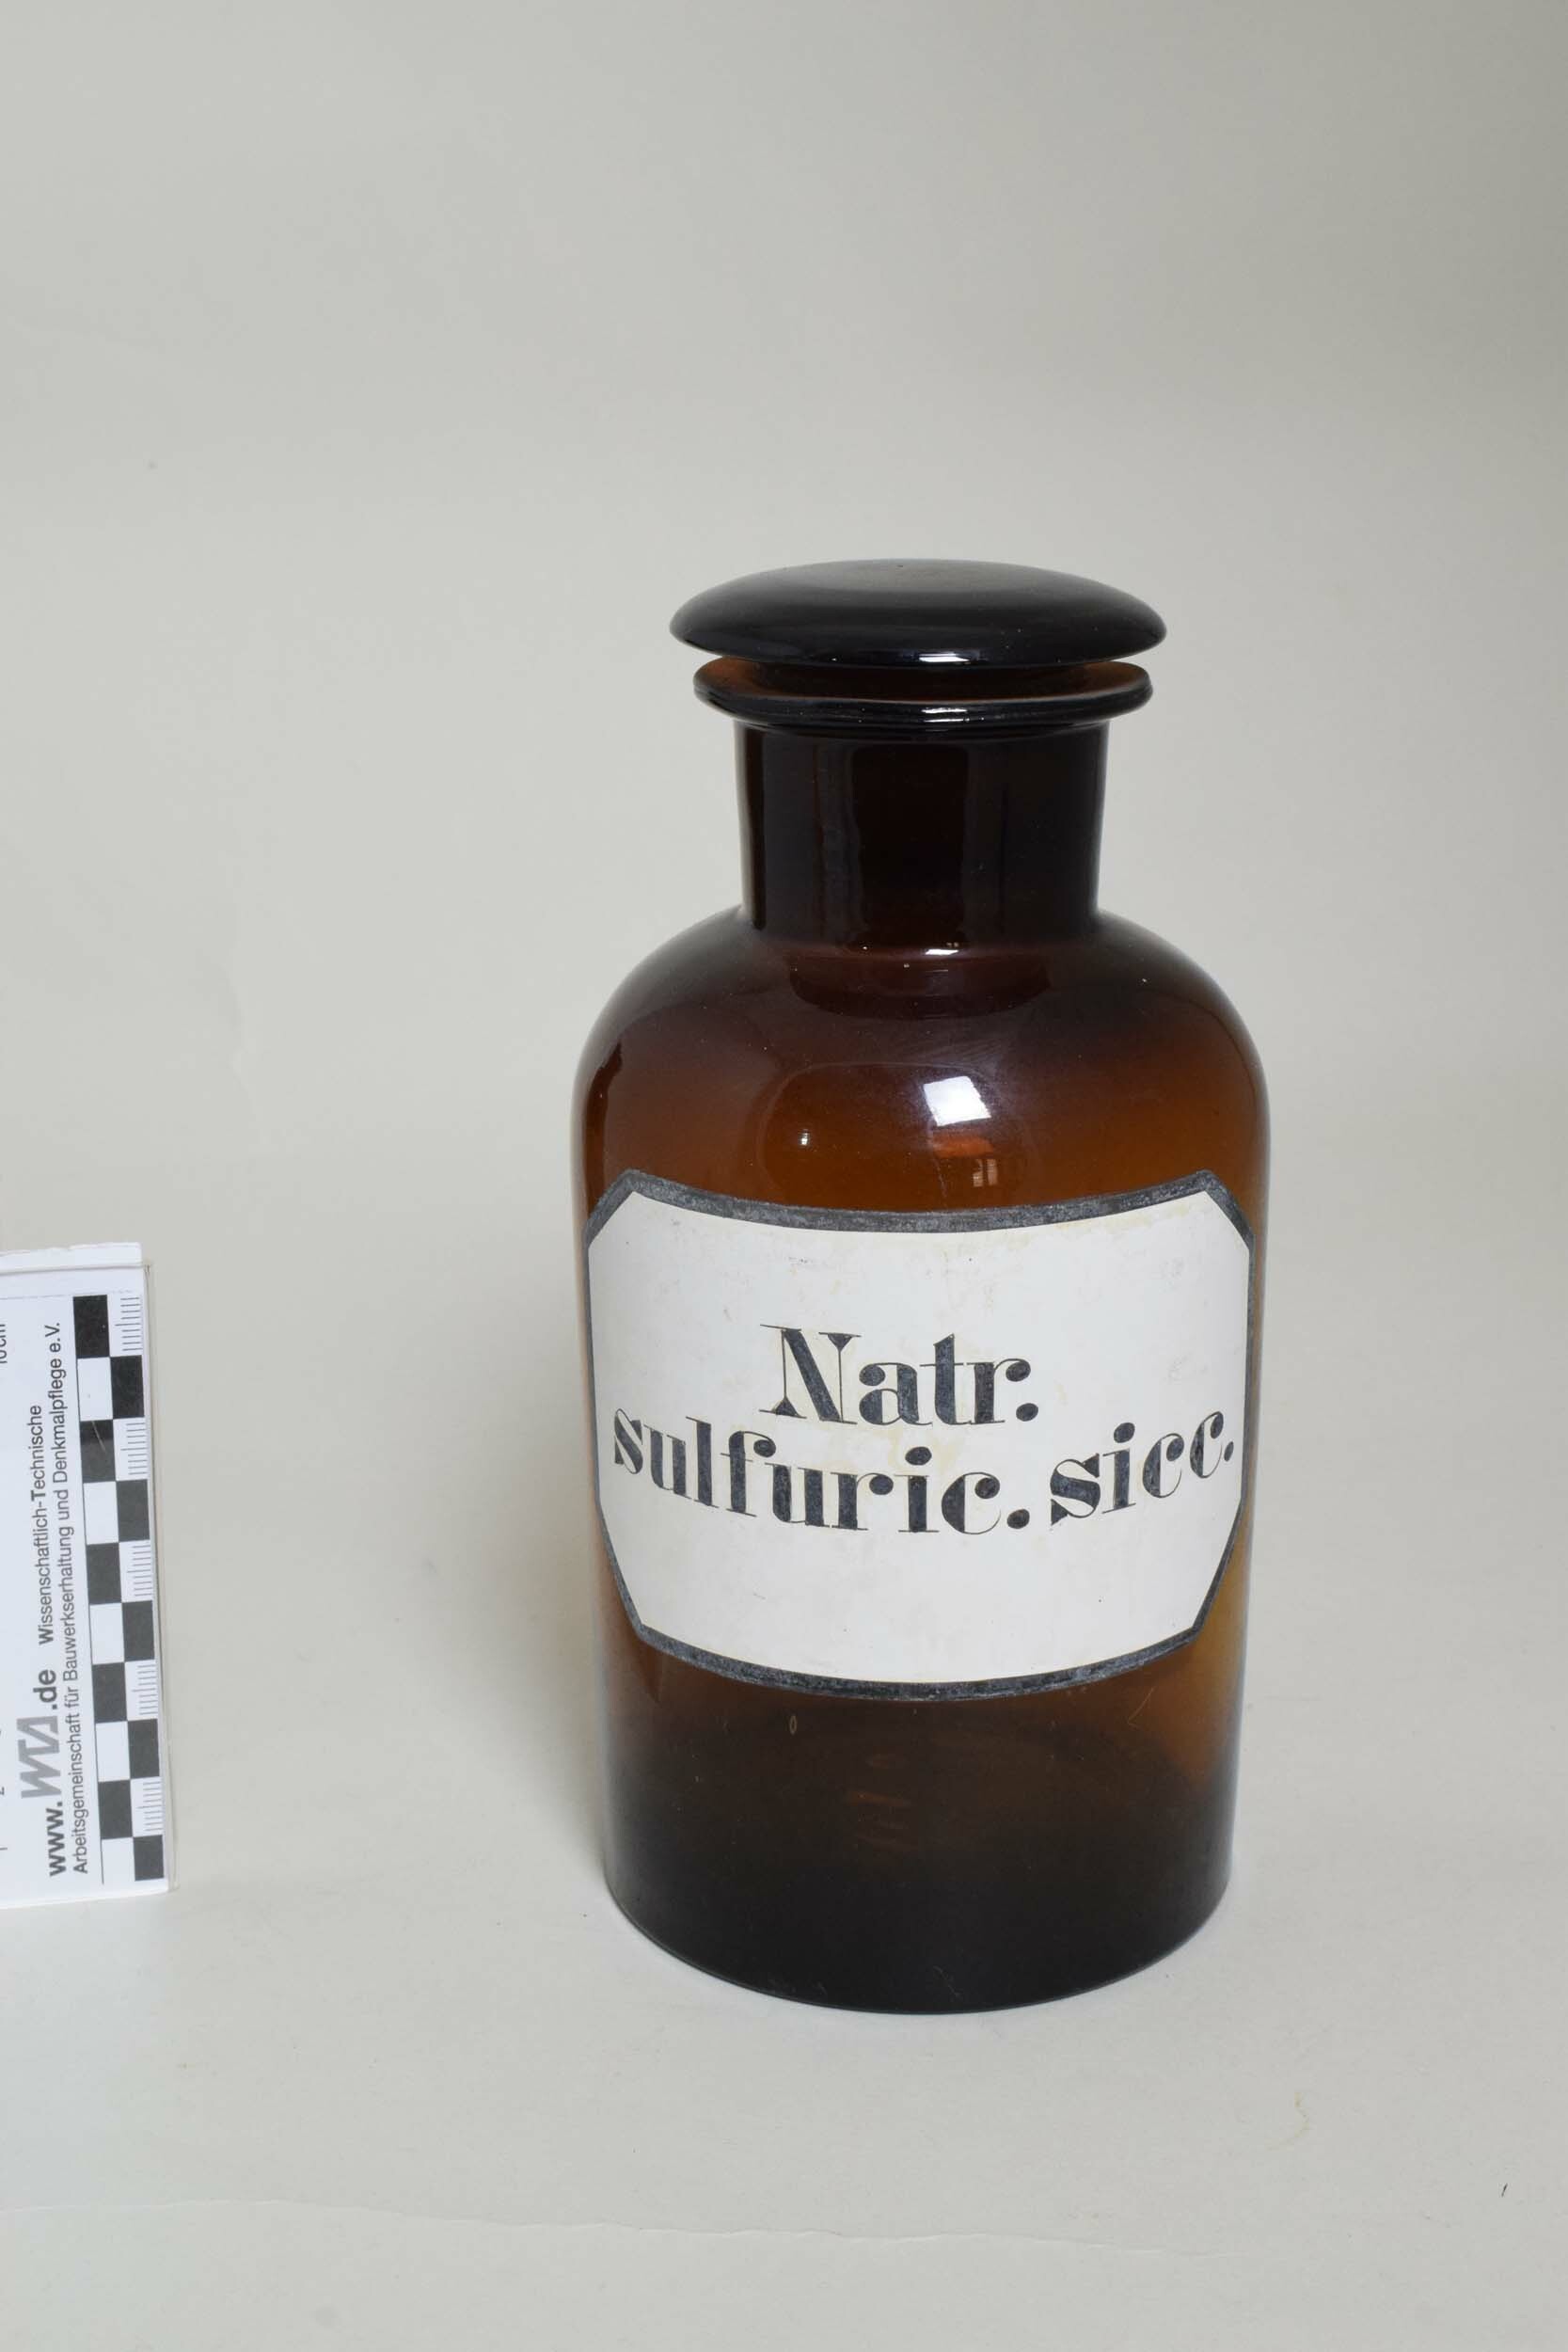 Apothekenflasche "Natr. sulfuric. sicc." (Heimatmuseum Dohna CC BY-NC-SA)